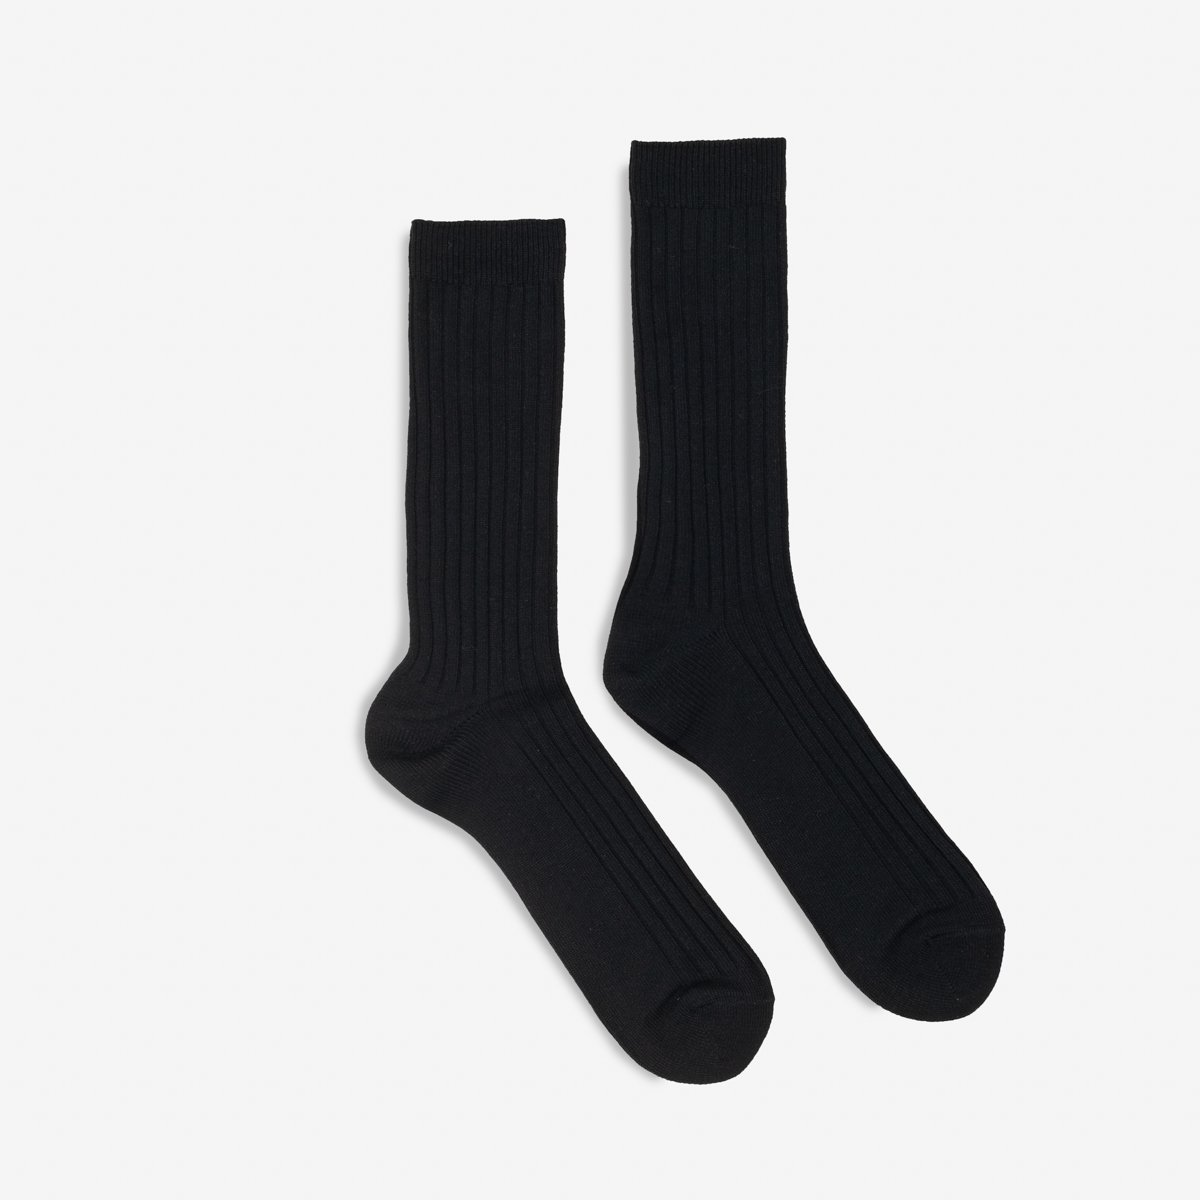 UTILITEES Mixed Cotton Crew Socks - Black